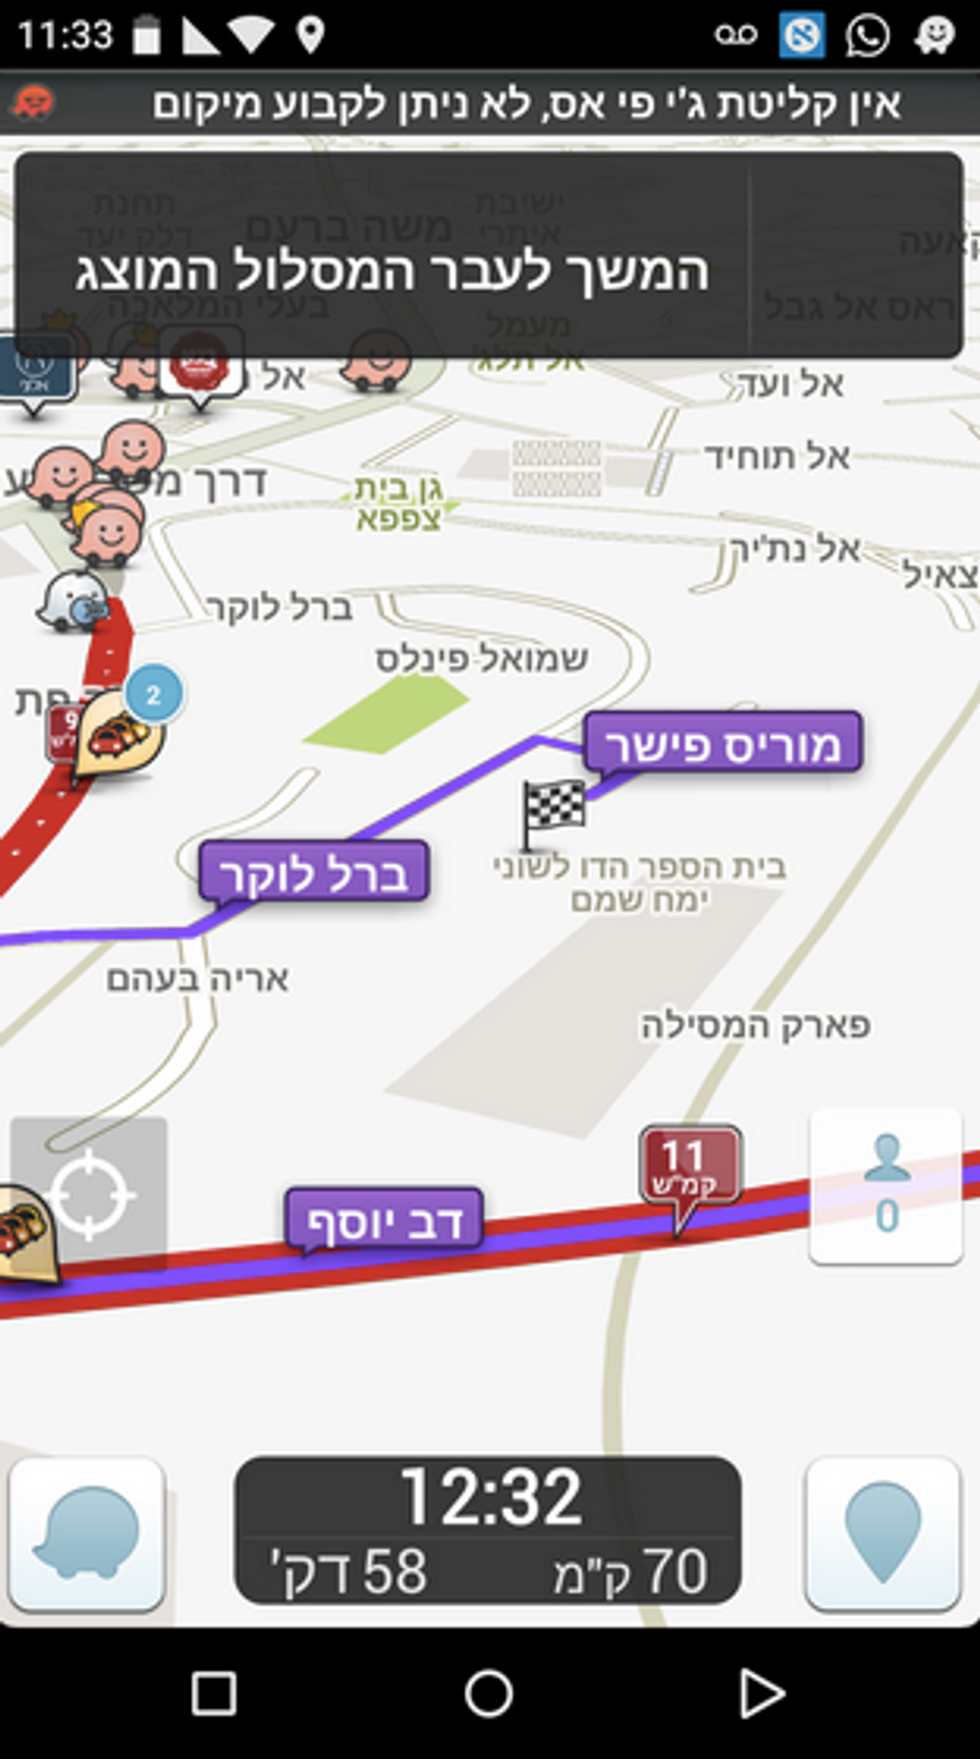 See What Google's Waze Navigation App Labeled a Bilingual Jewish-Arab School 